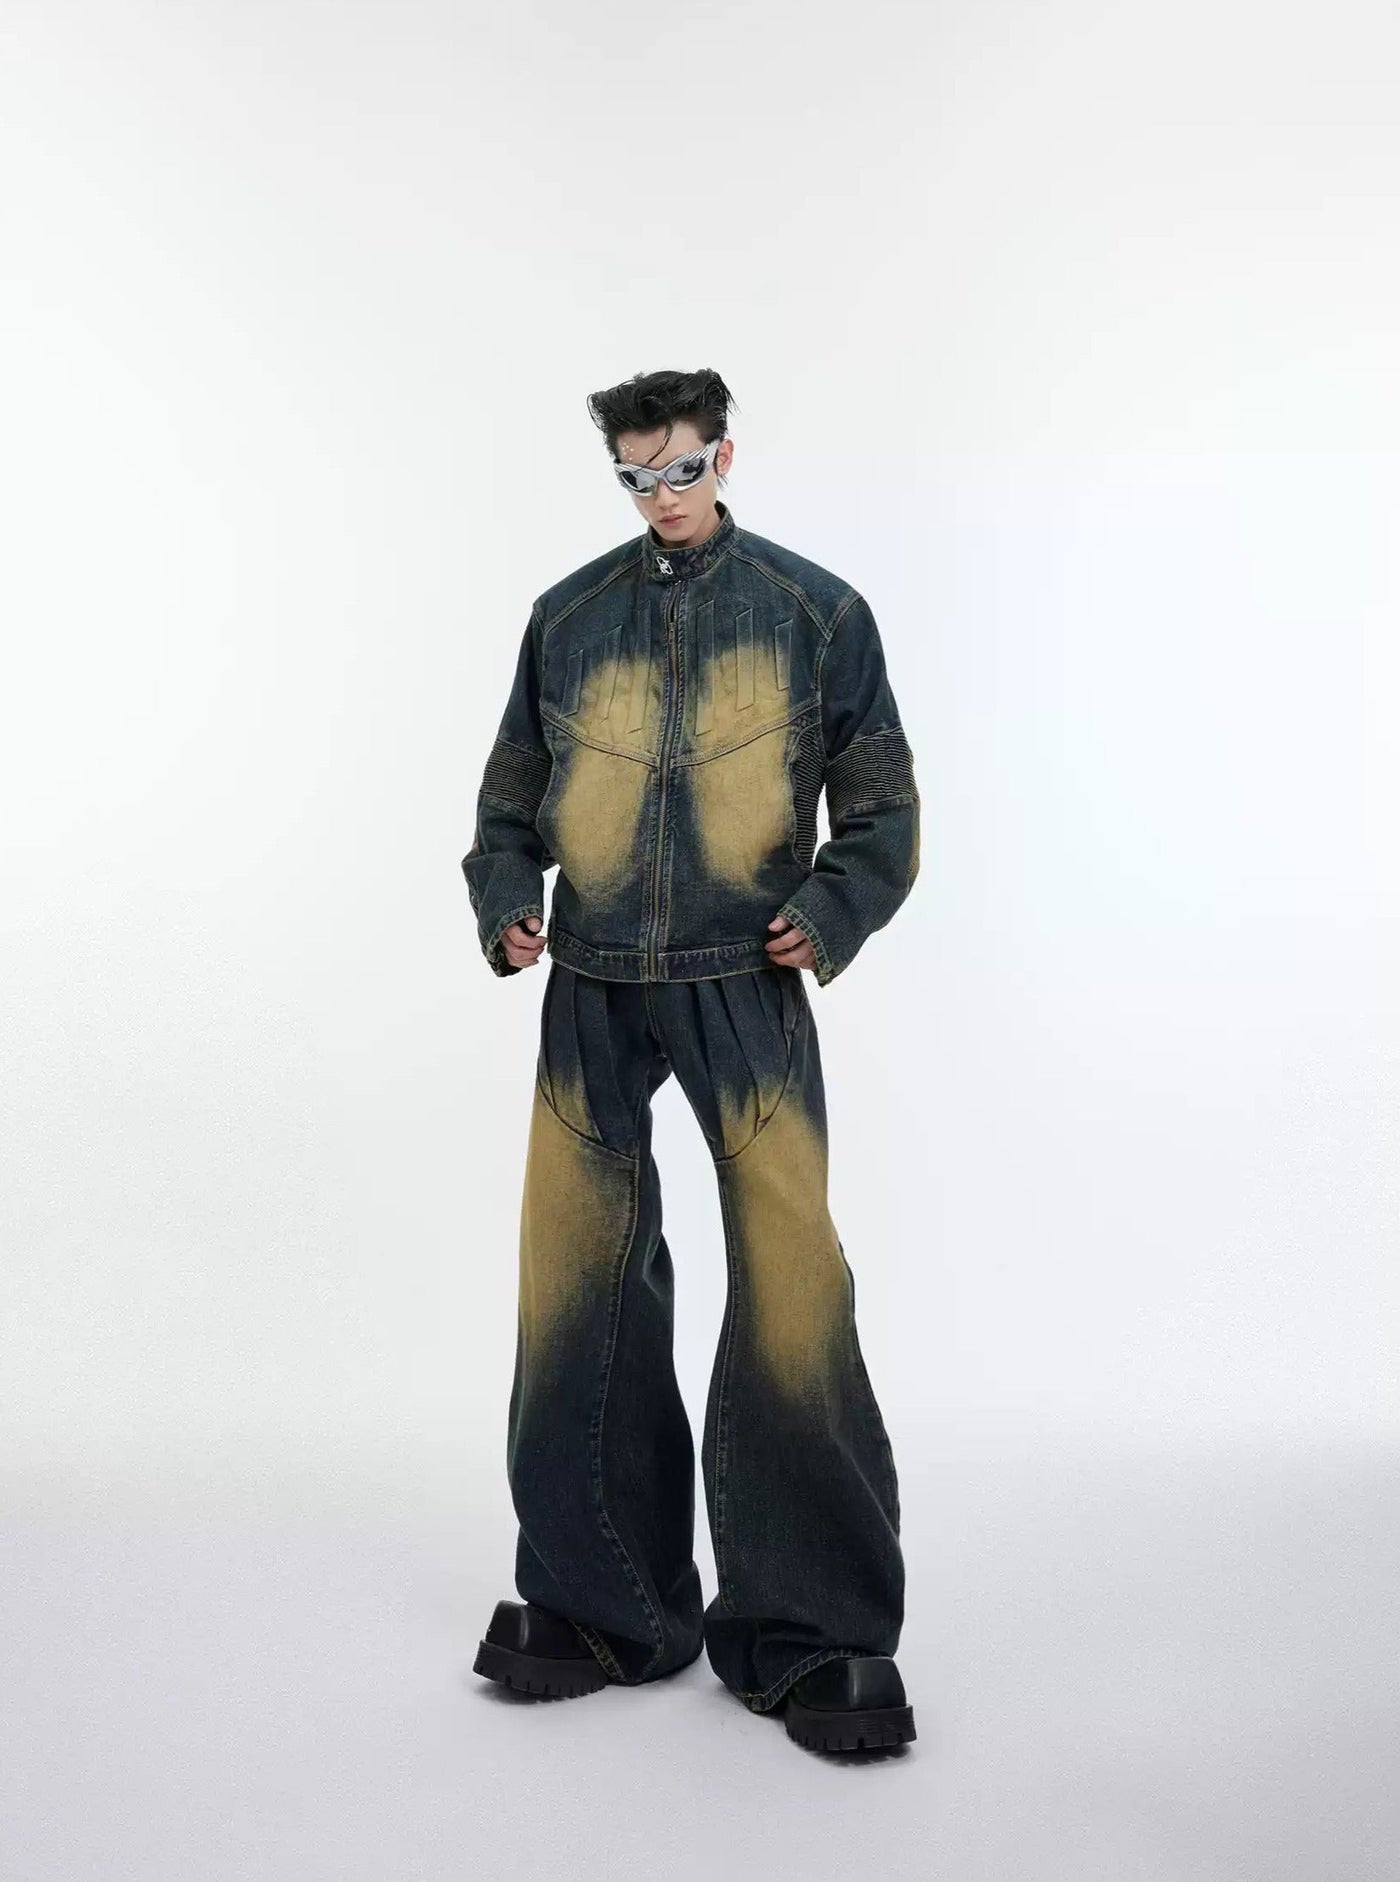 Fade Zipped Denim Jacket & Jeans Set Korean Street Fashion Clothing Set By Argue Culture Shop Online at OH Vault